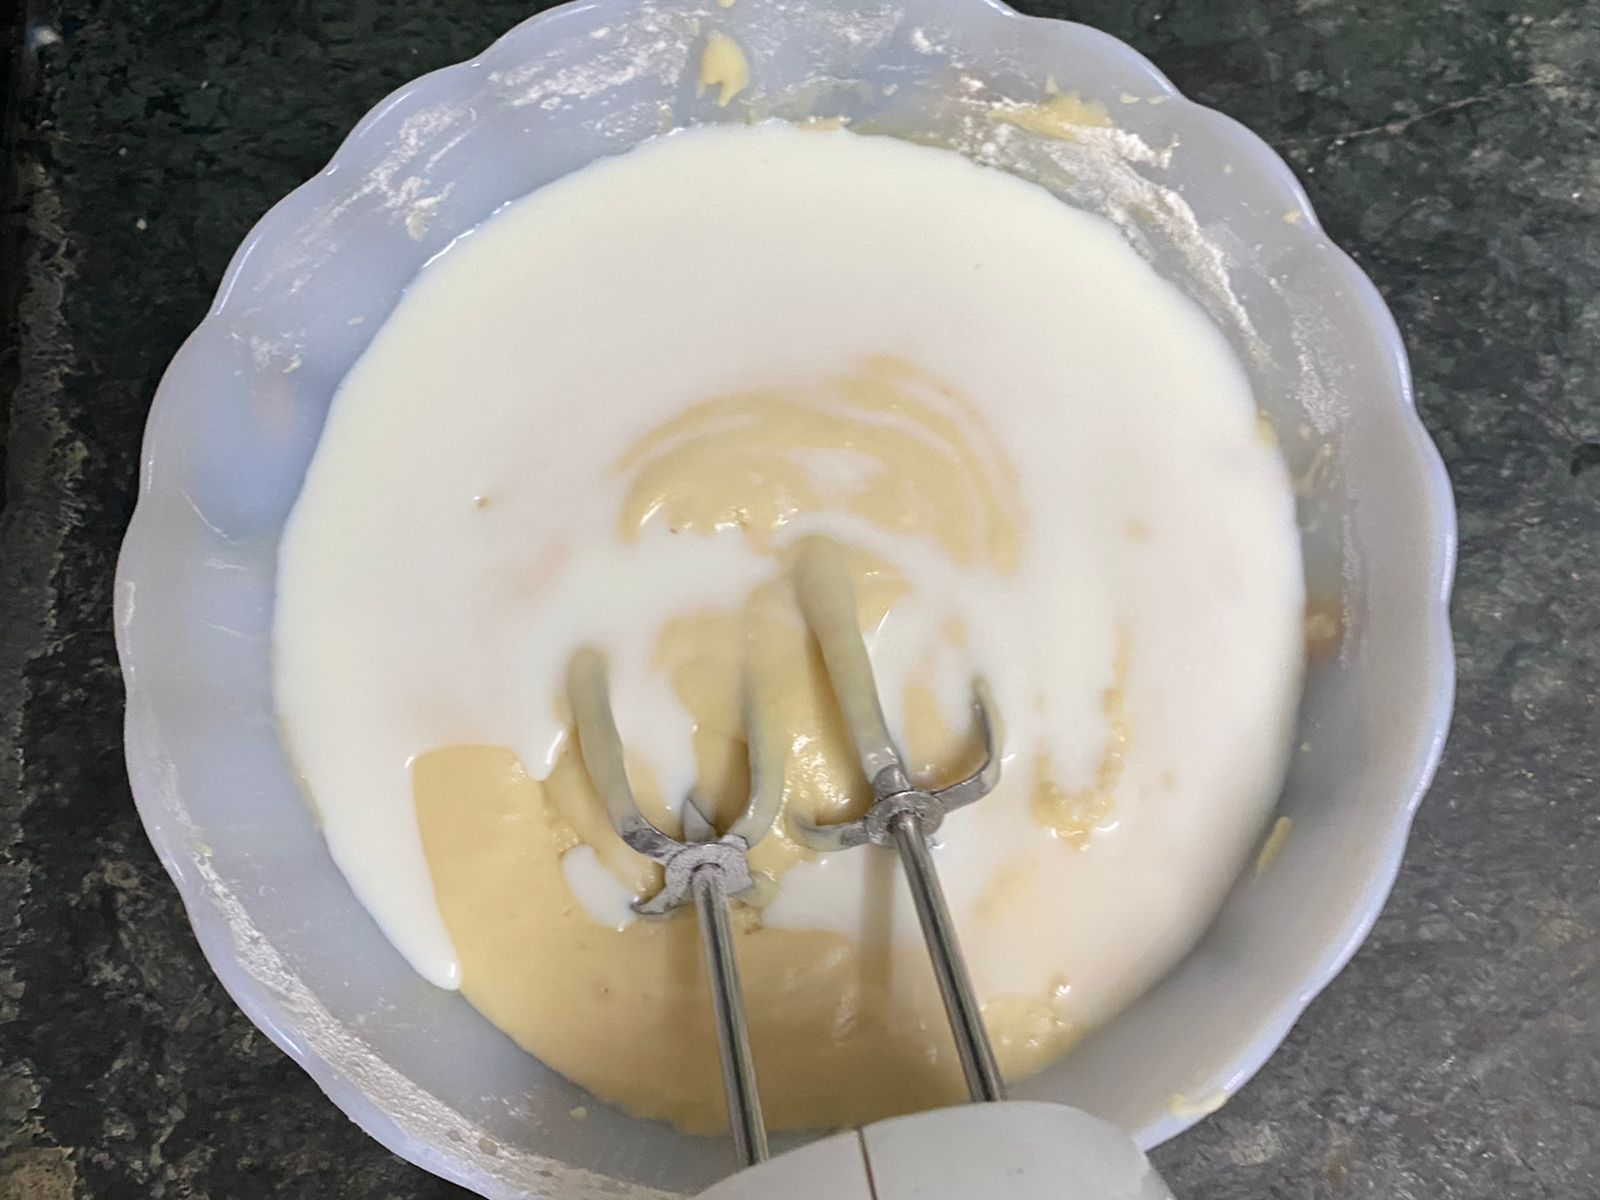 Eggless Marble Cake Recipe